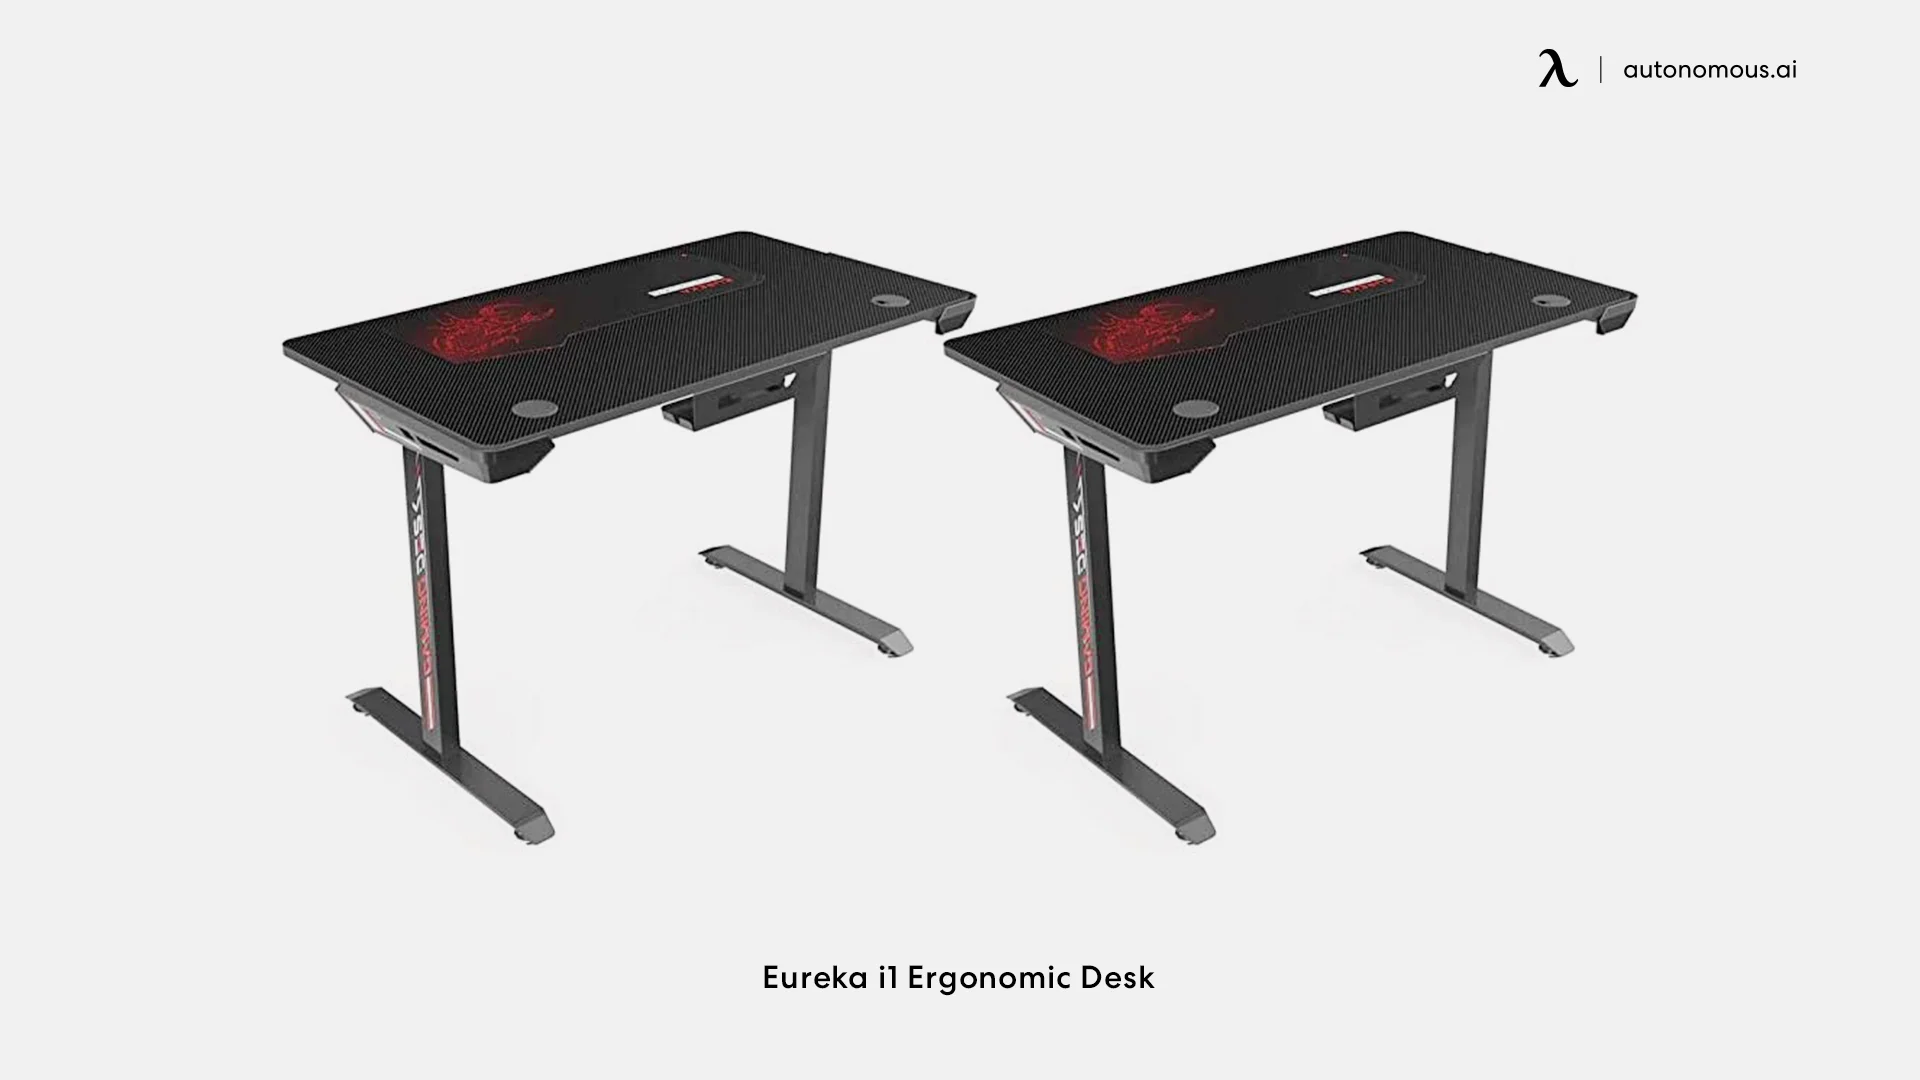 Eureka i1 Ergonomic Desk